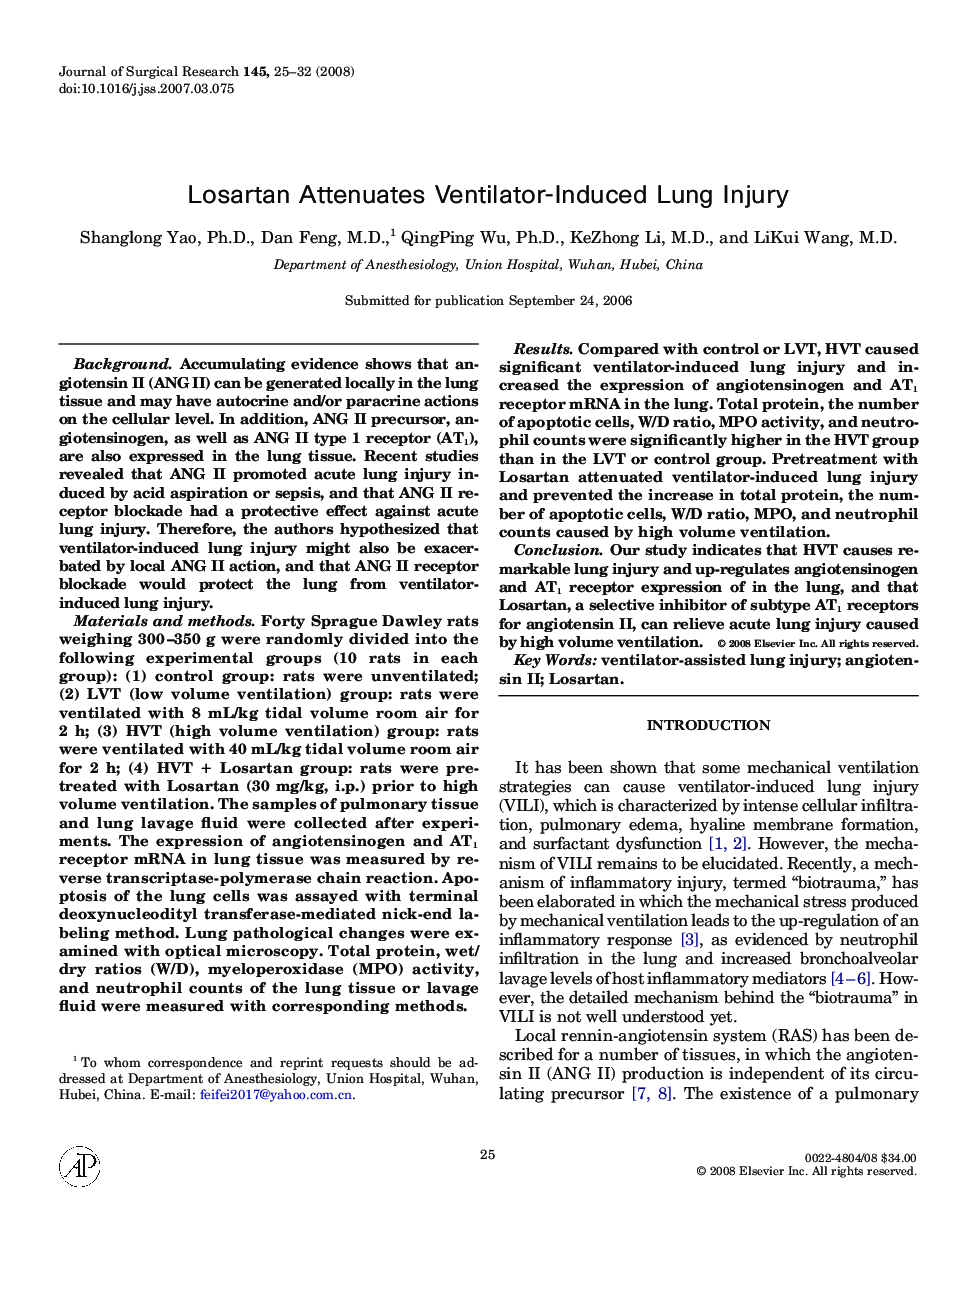 Losartan Attenuates Ventilator-Induced Lung Injury